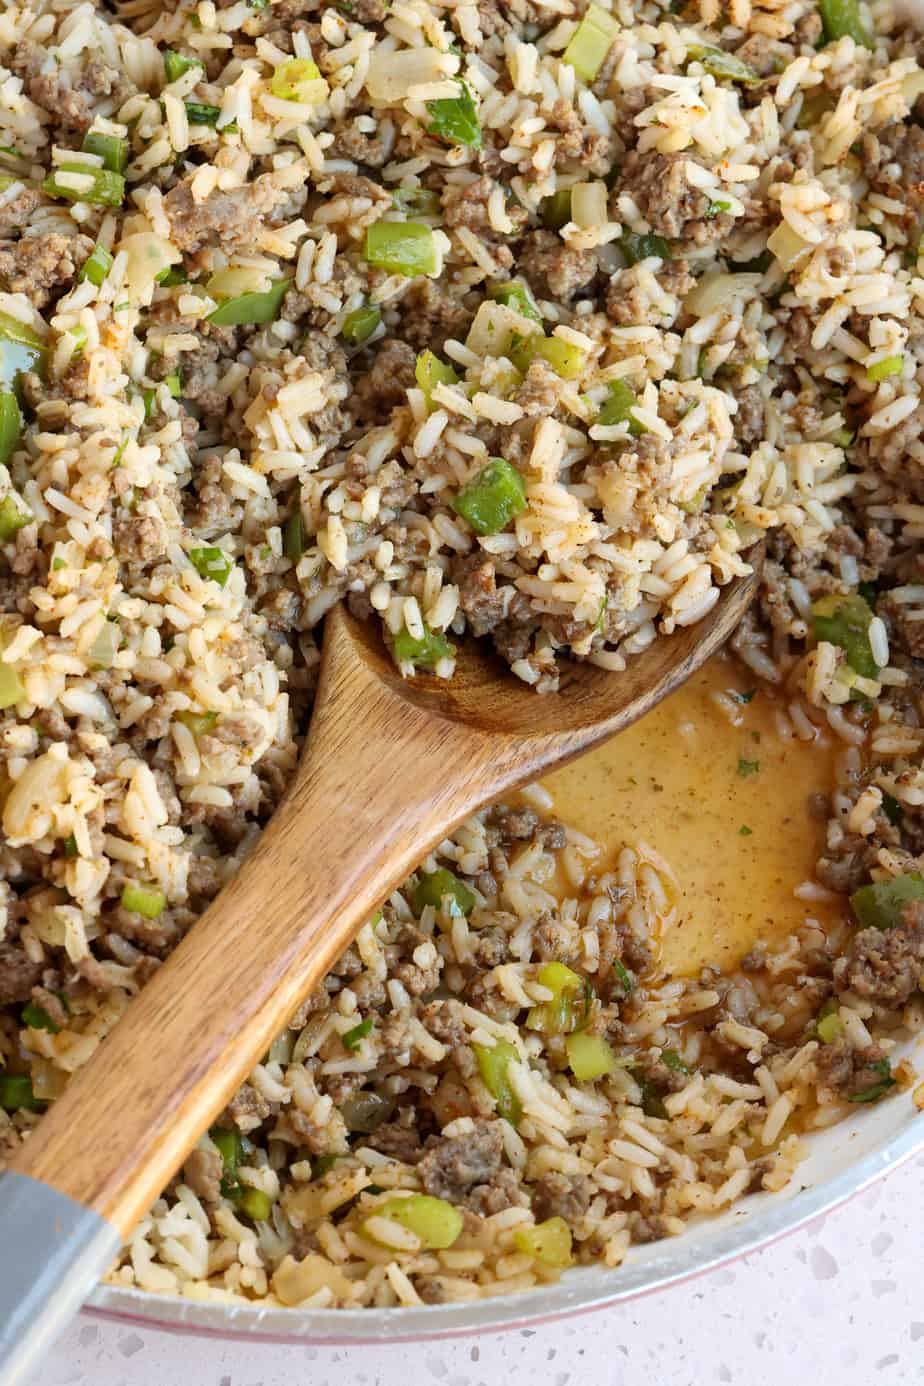 Cajun-Style Dirty Rice, Cajun Rice Recipe